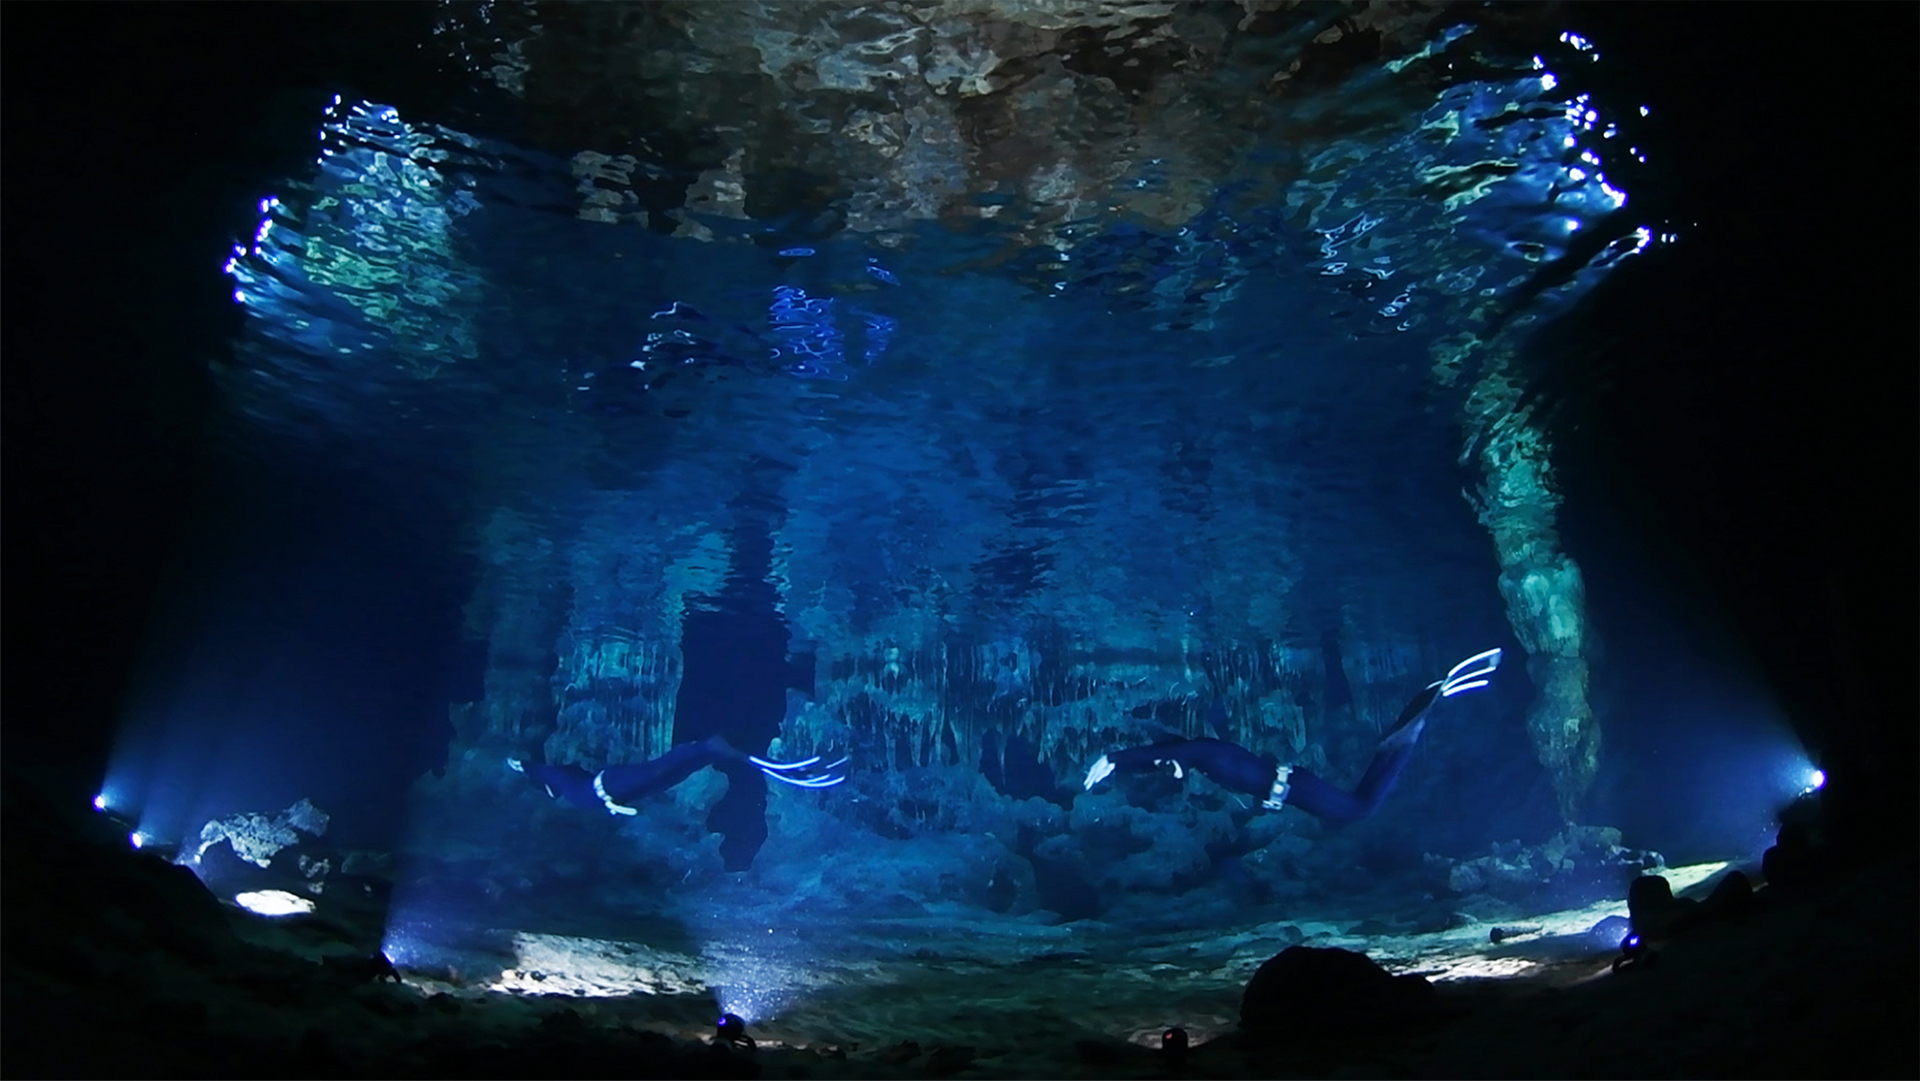 Hydrodance Elephant Cave, video still 1